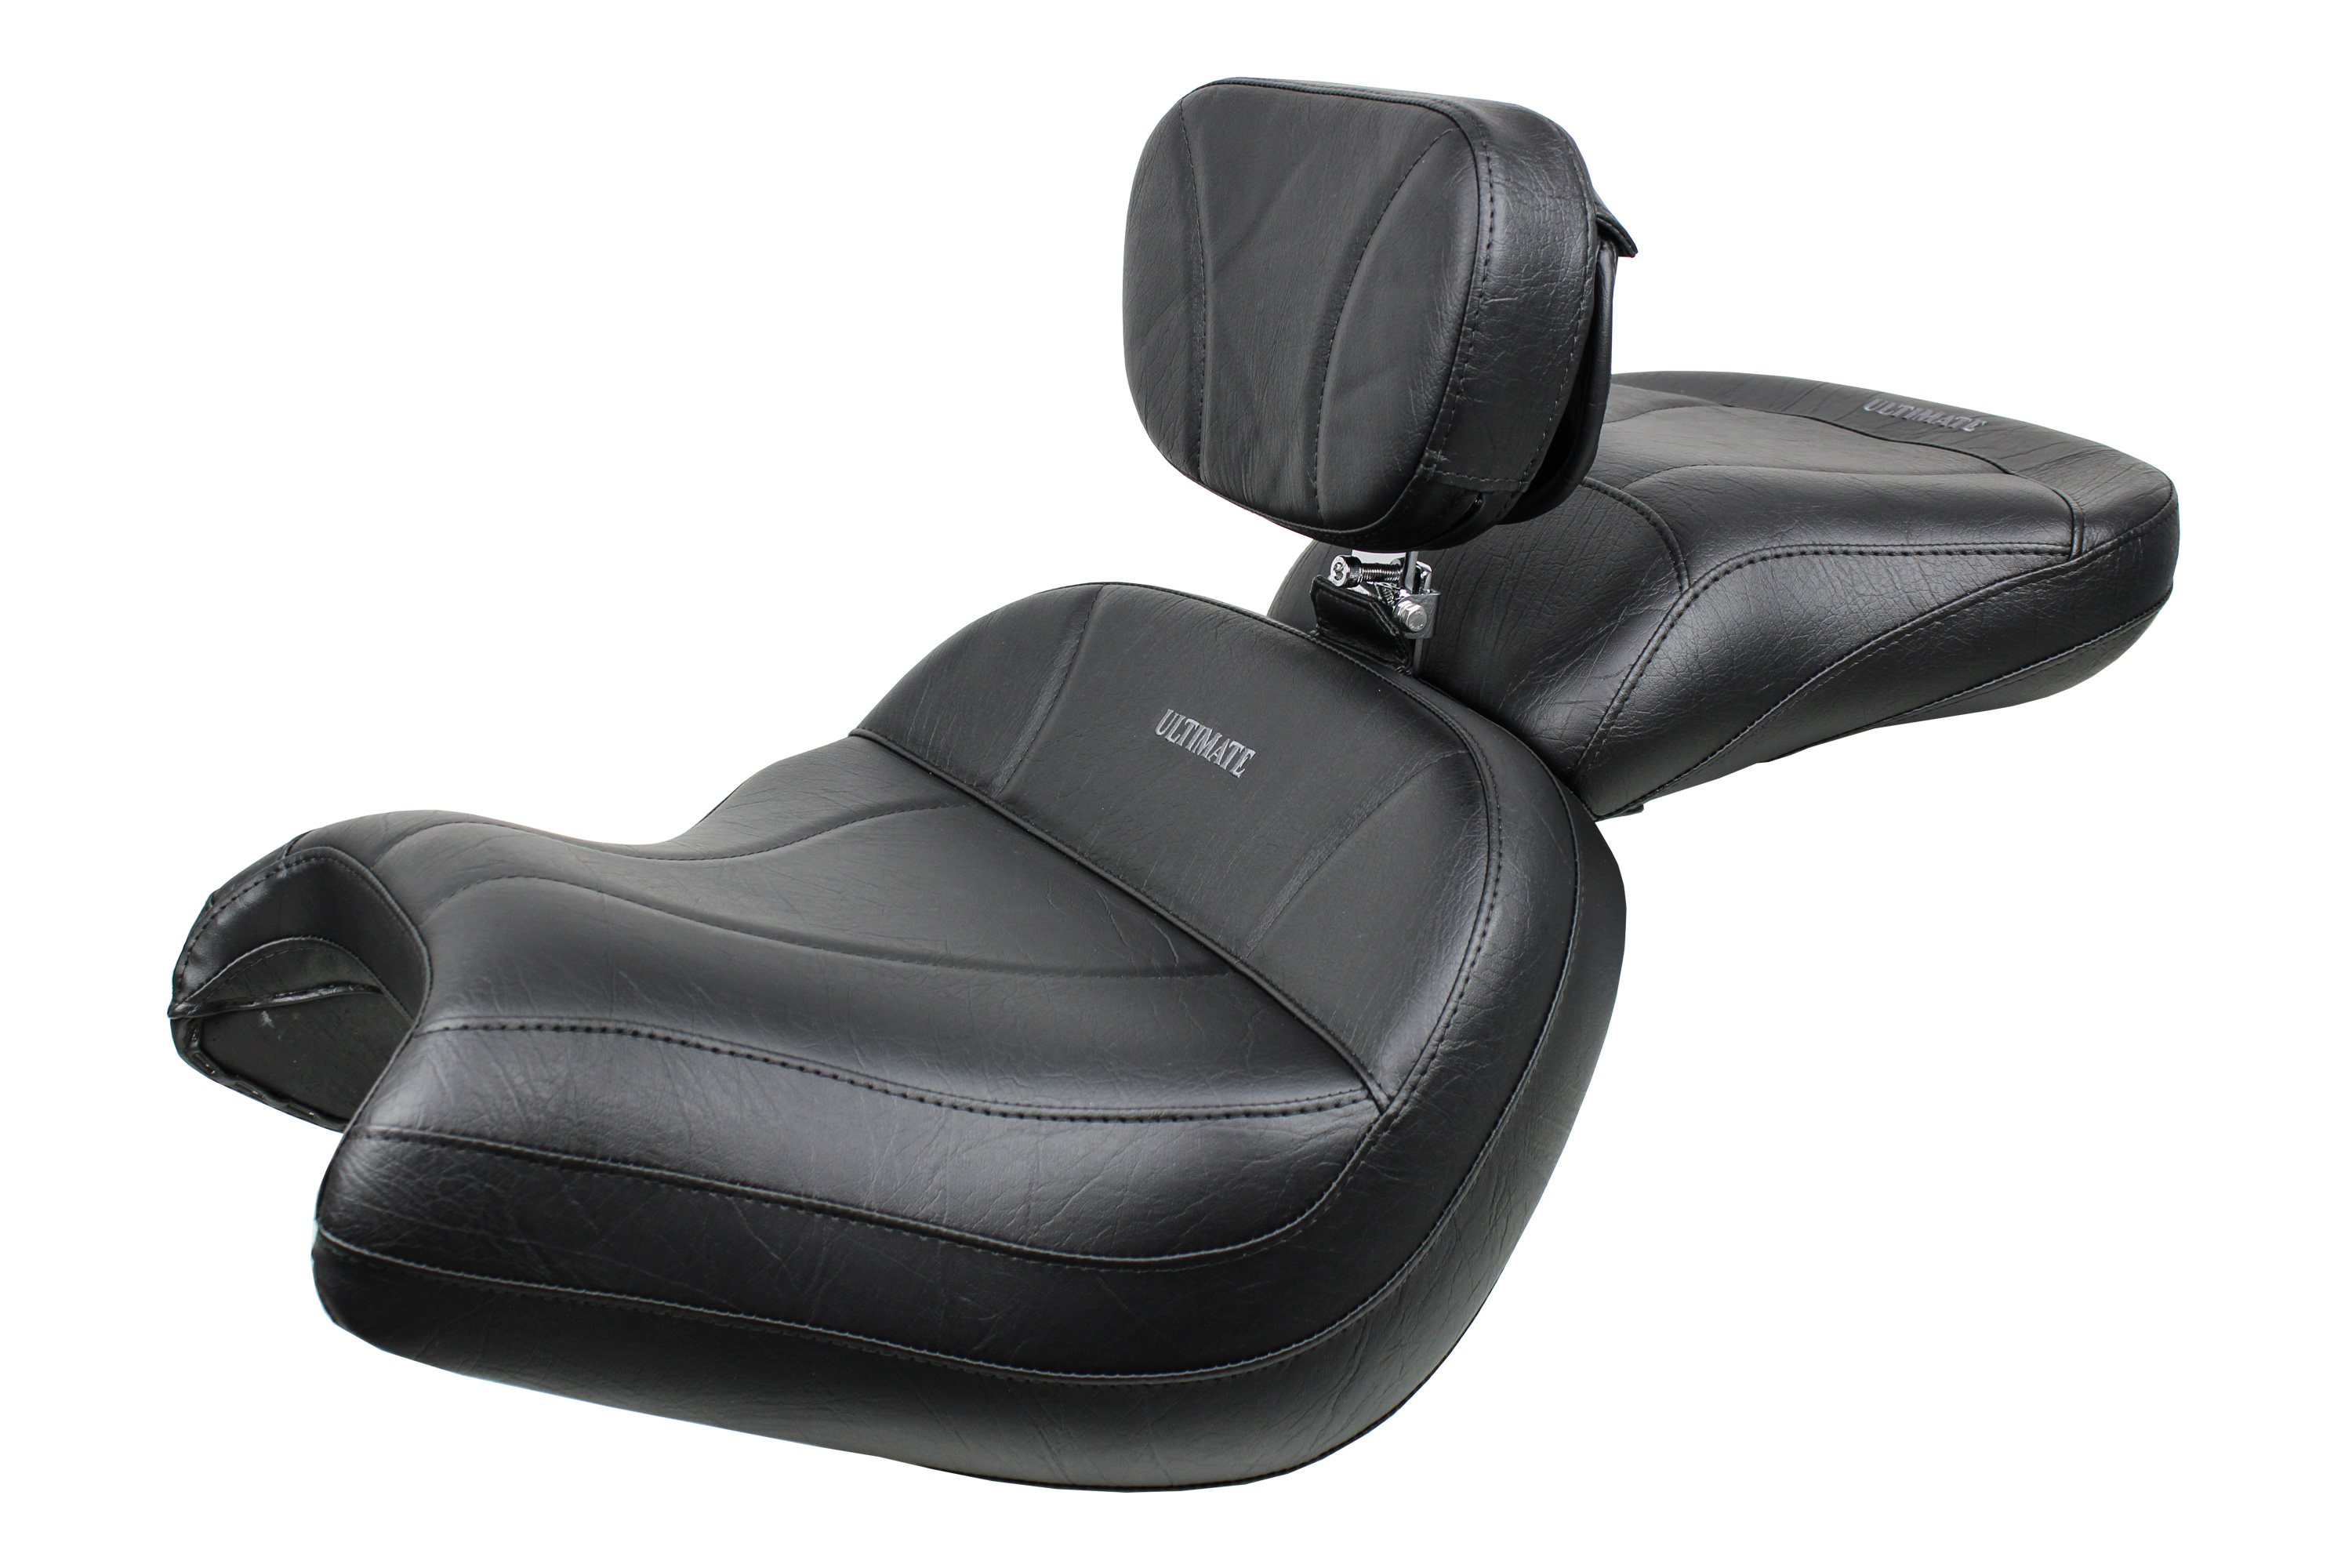 VTX 1800 C Big Boy Seat, Passenger Seat and Driver Backrest - Plain or Studded